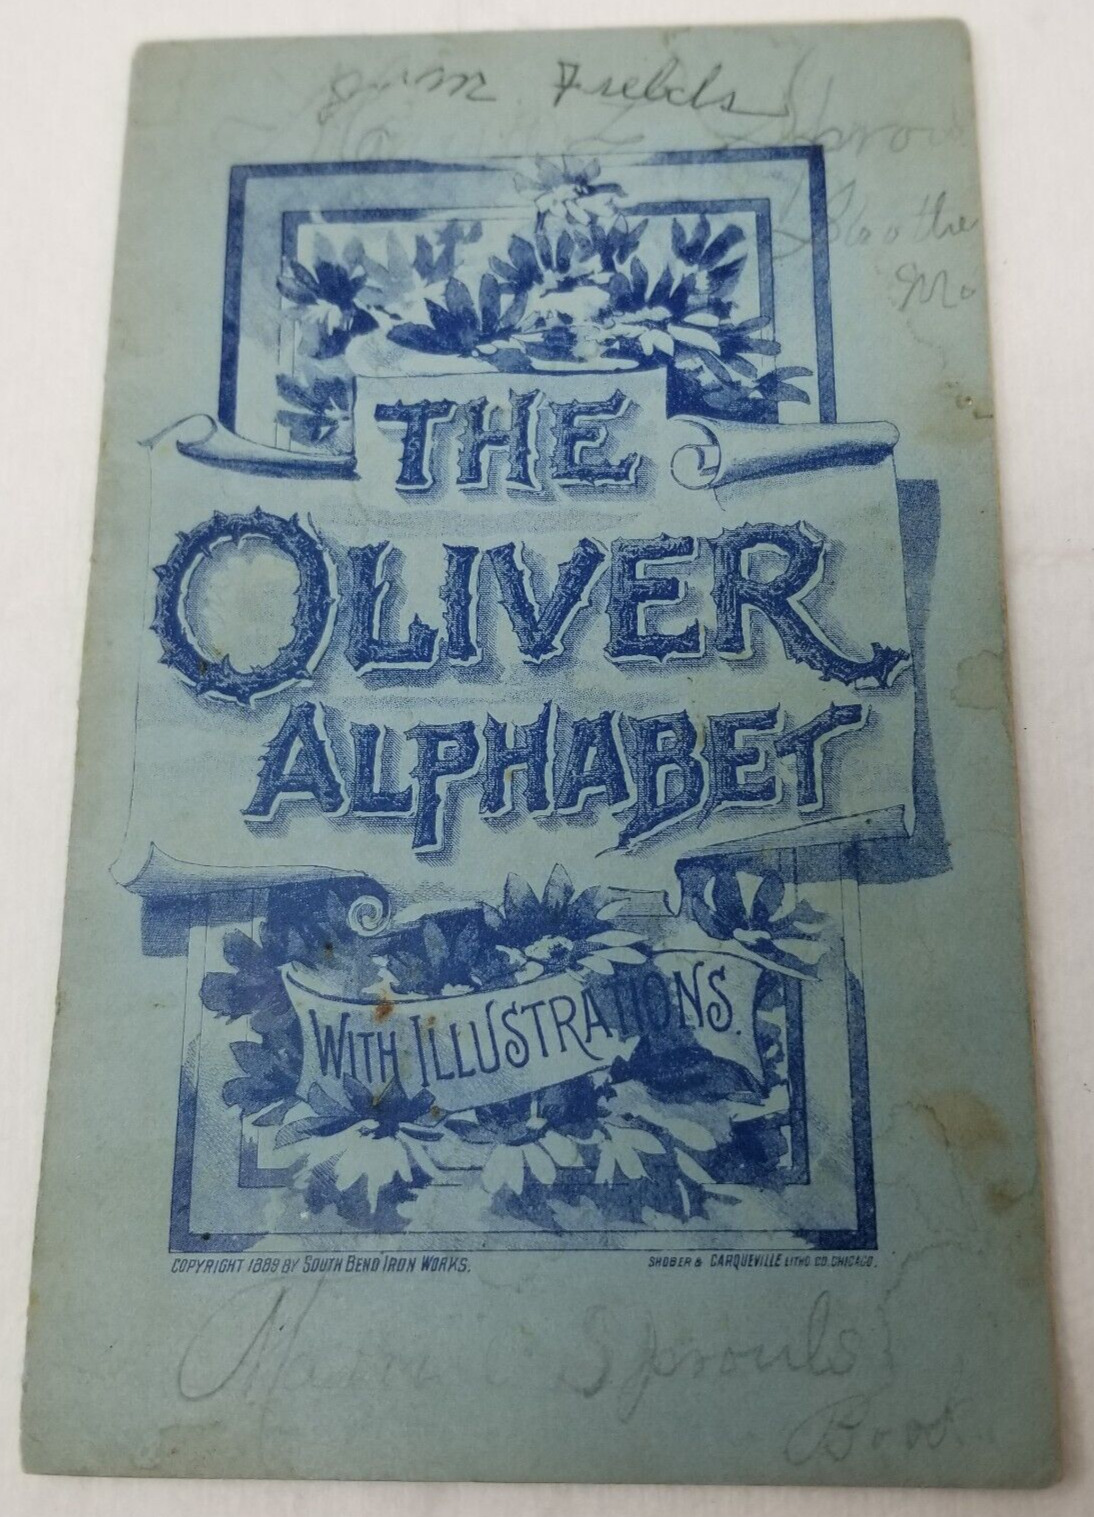 The Oliver Chilled Plow Works 1889 Alphabet Catalog Schaw Batcher Sacramento CA